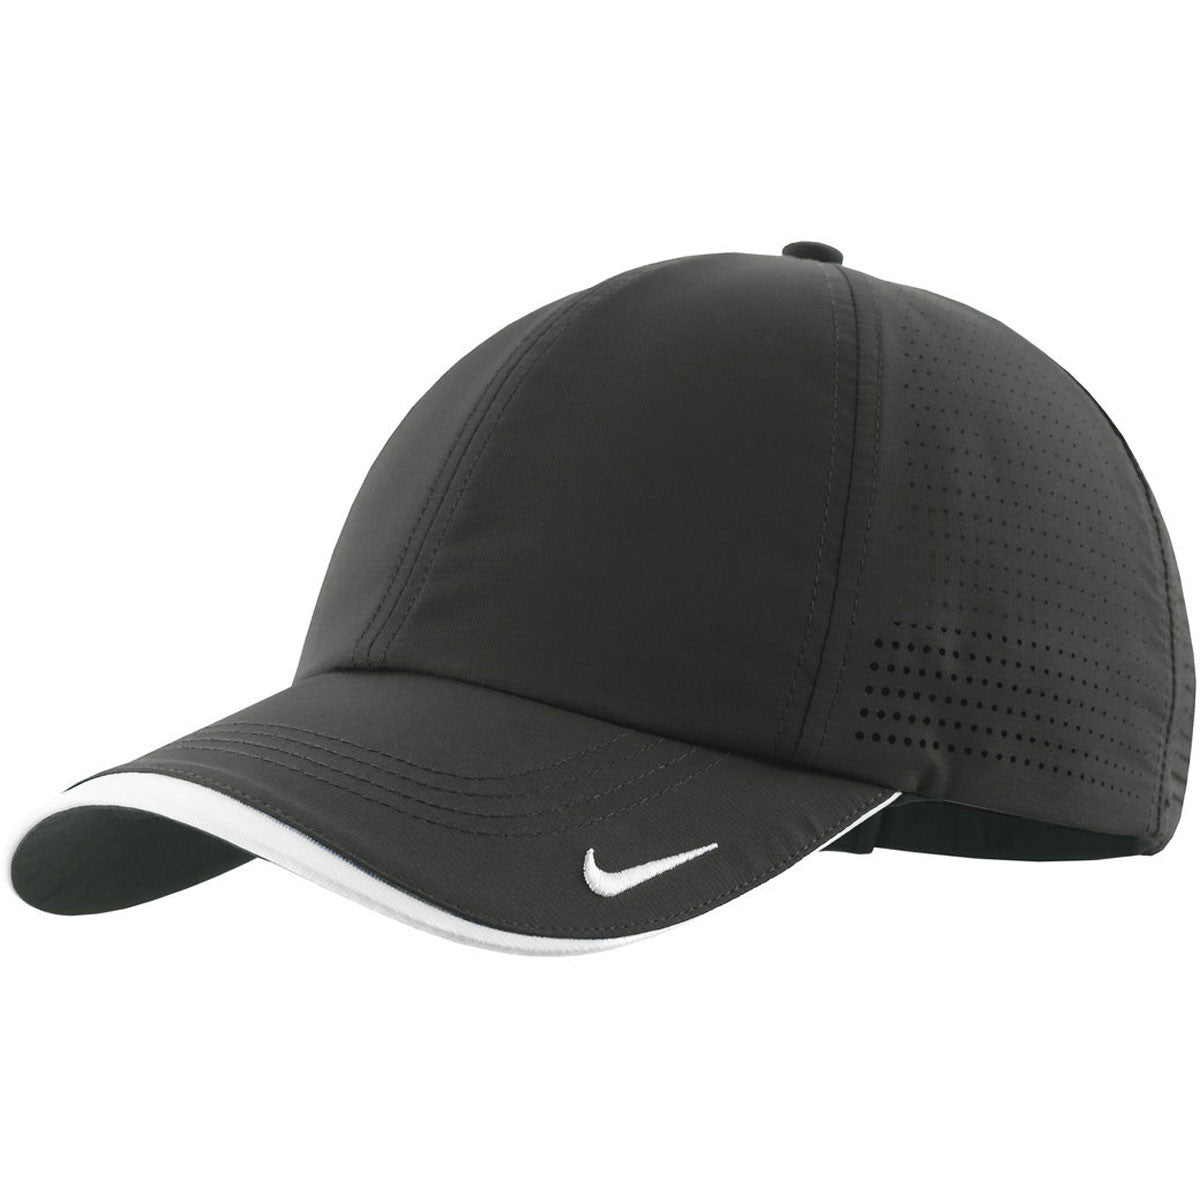 Nike Dri-FIT Anthracite Perforated Cap